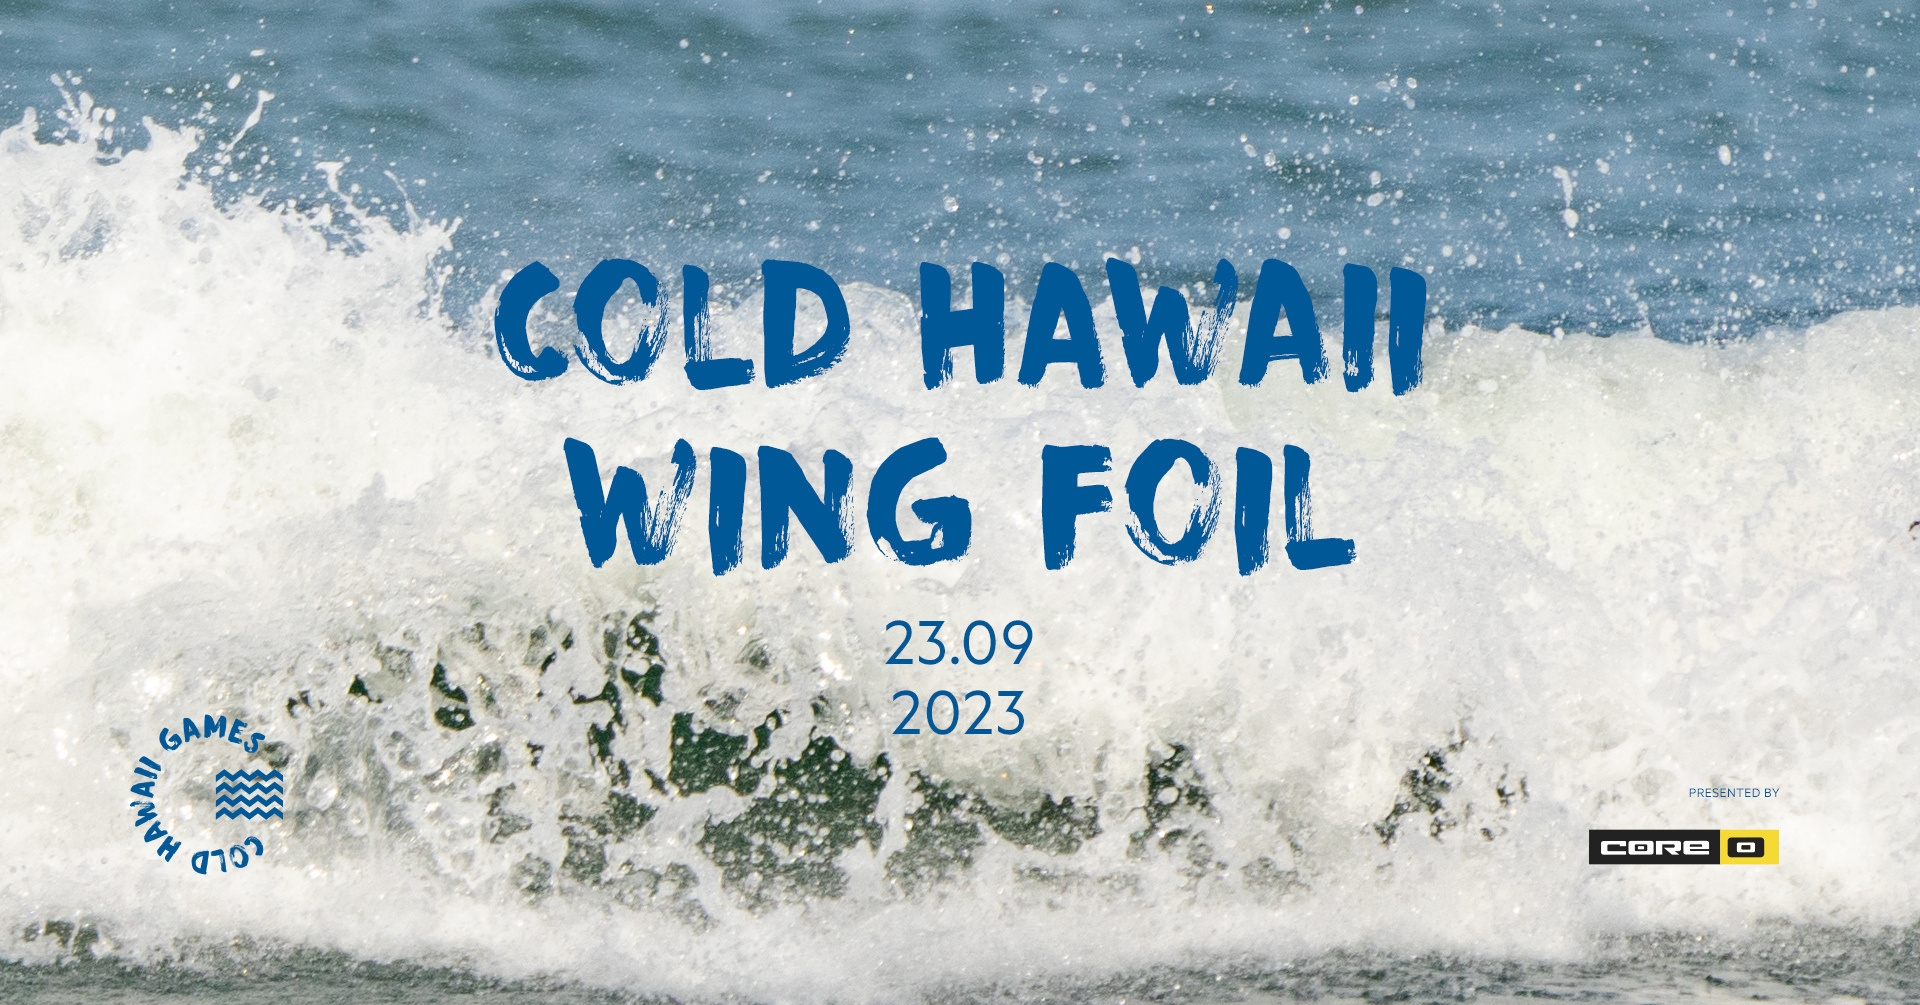 Cold Hawaii Games